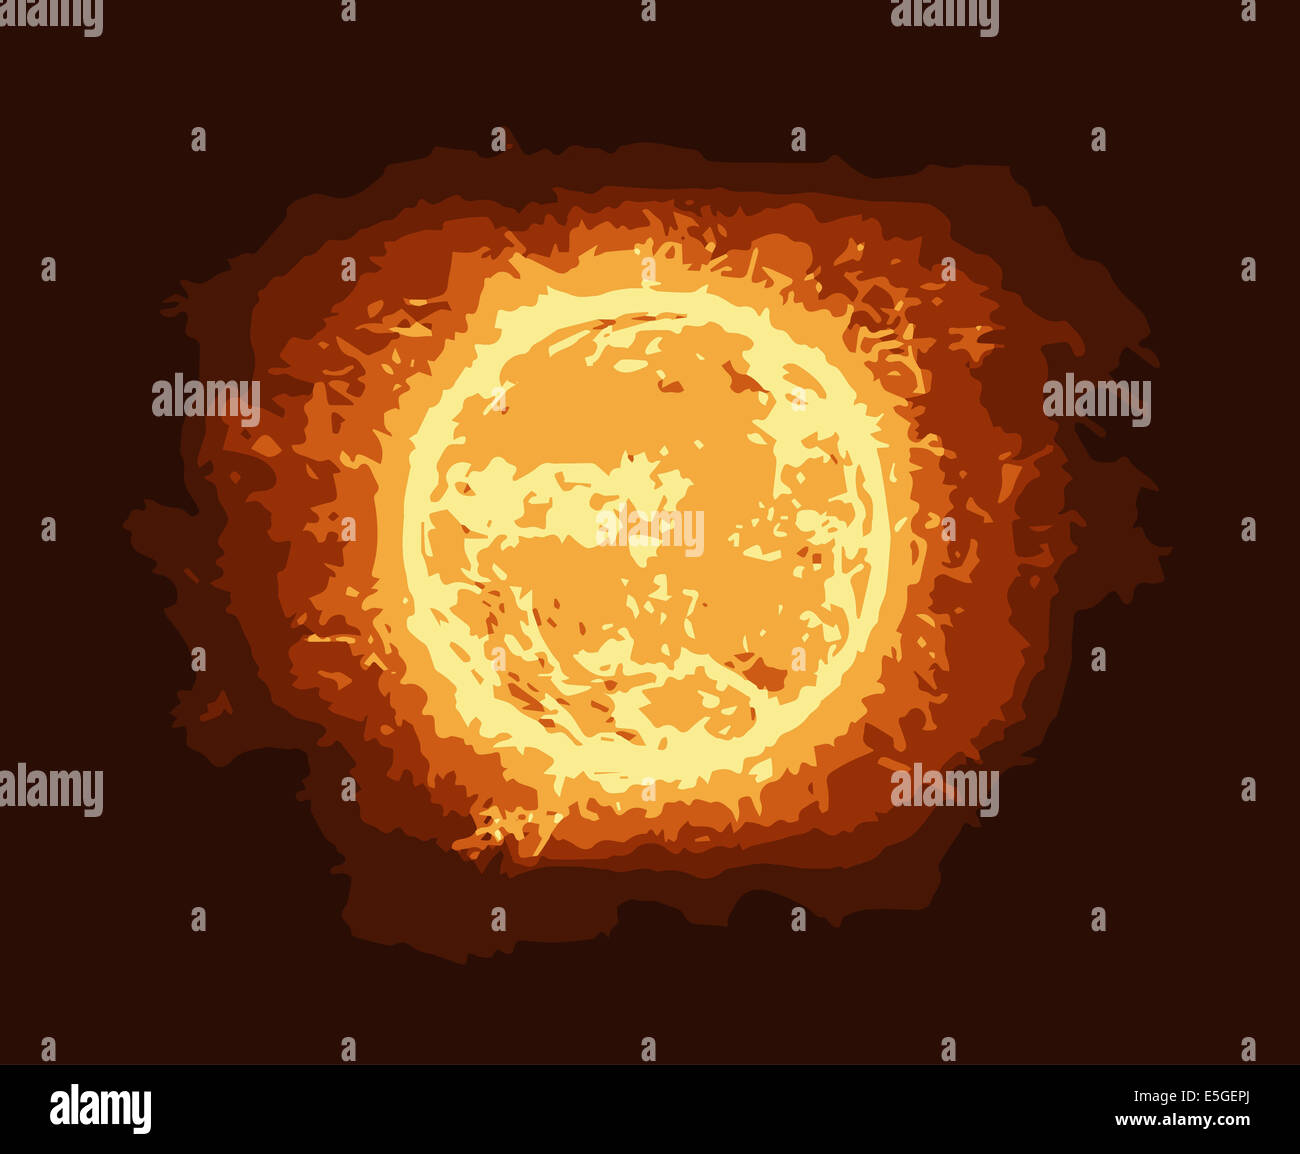 A sun like fireball or abstract nuclear explosion Stock Photo